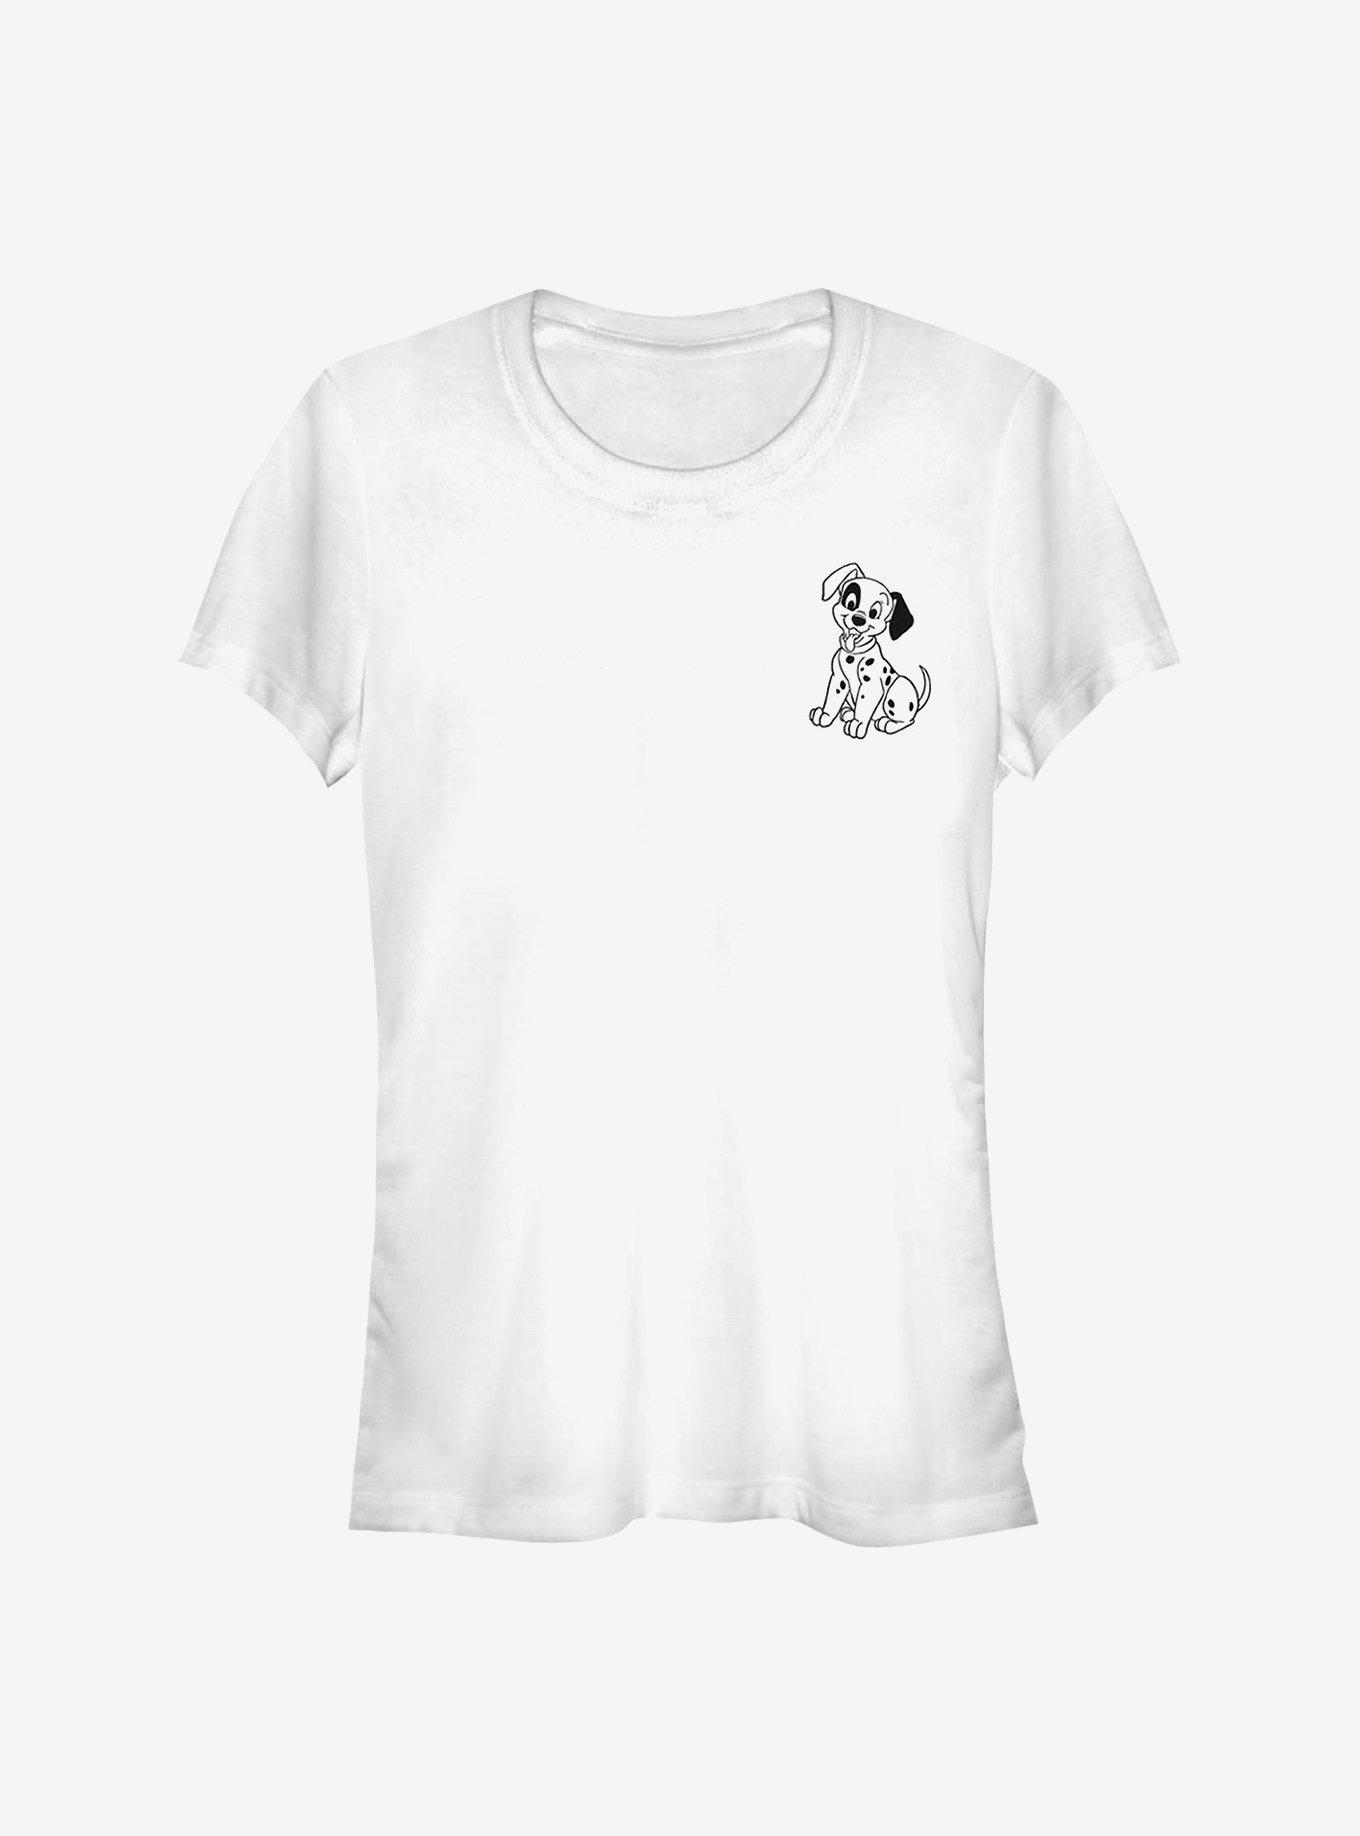 Disney 101 Dalmatians Patch Line Girls T-Shirt, , hi-res